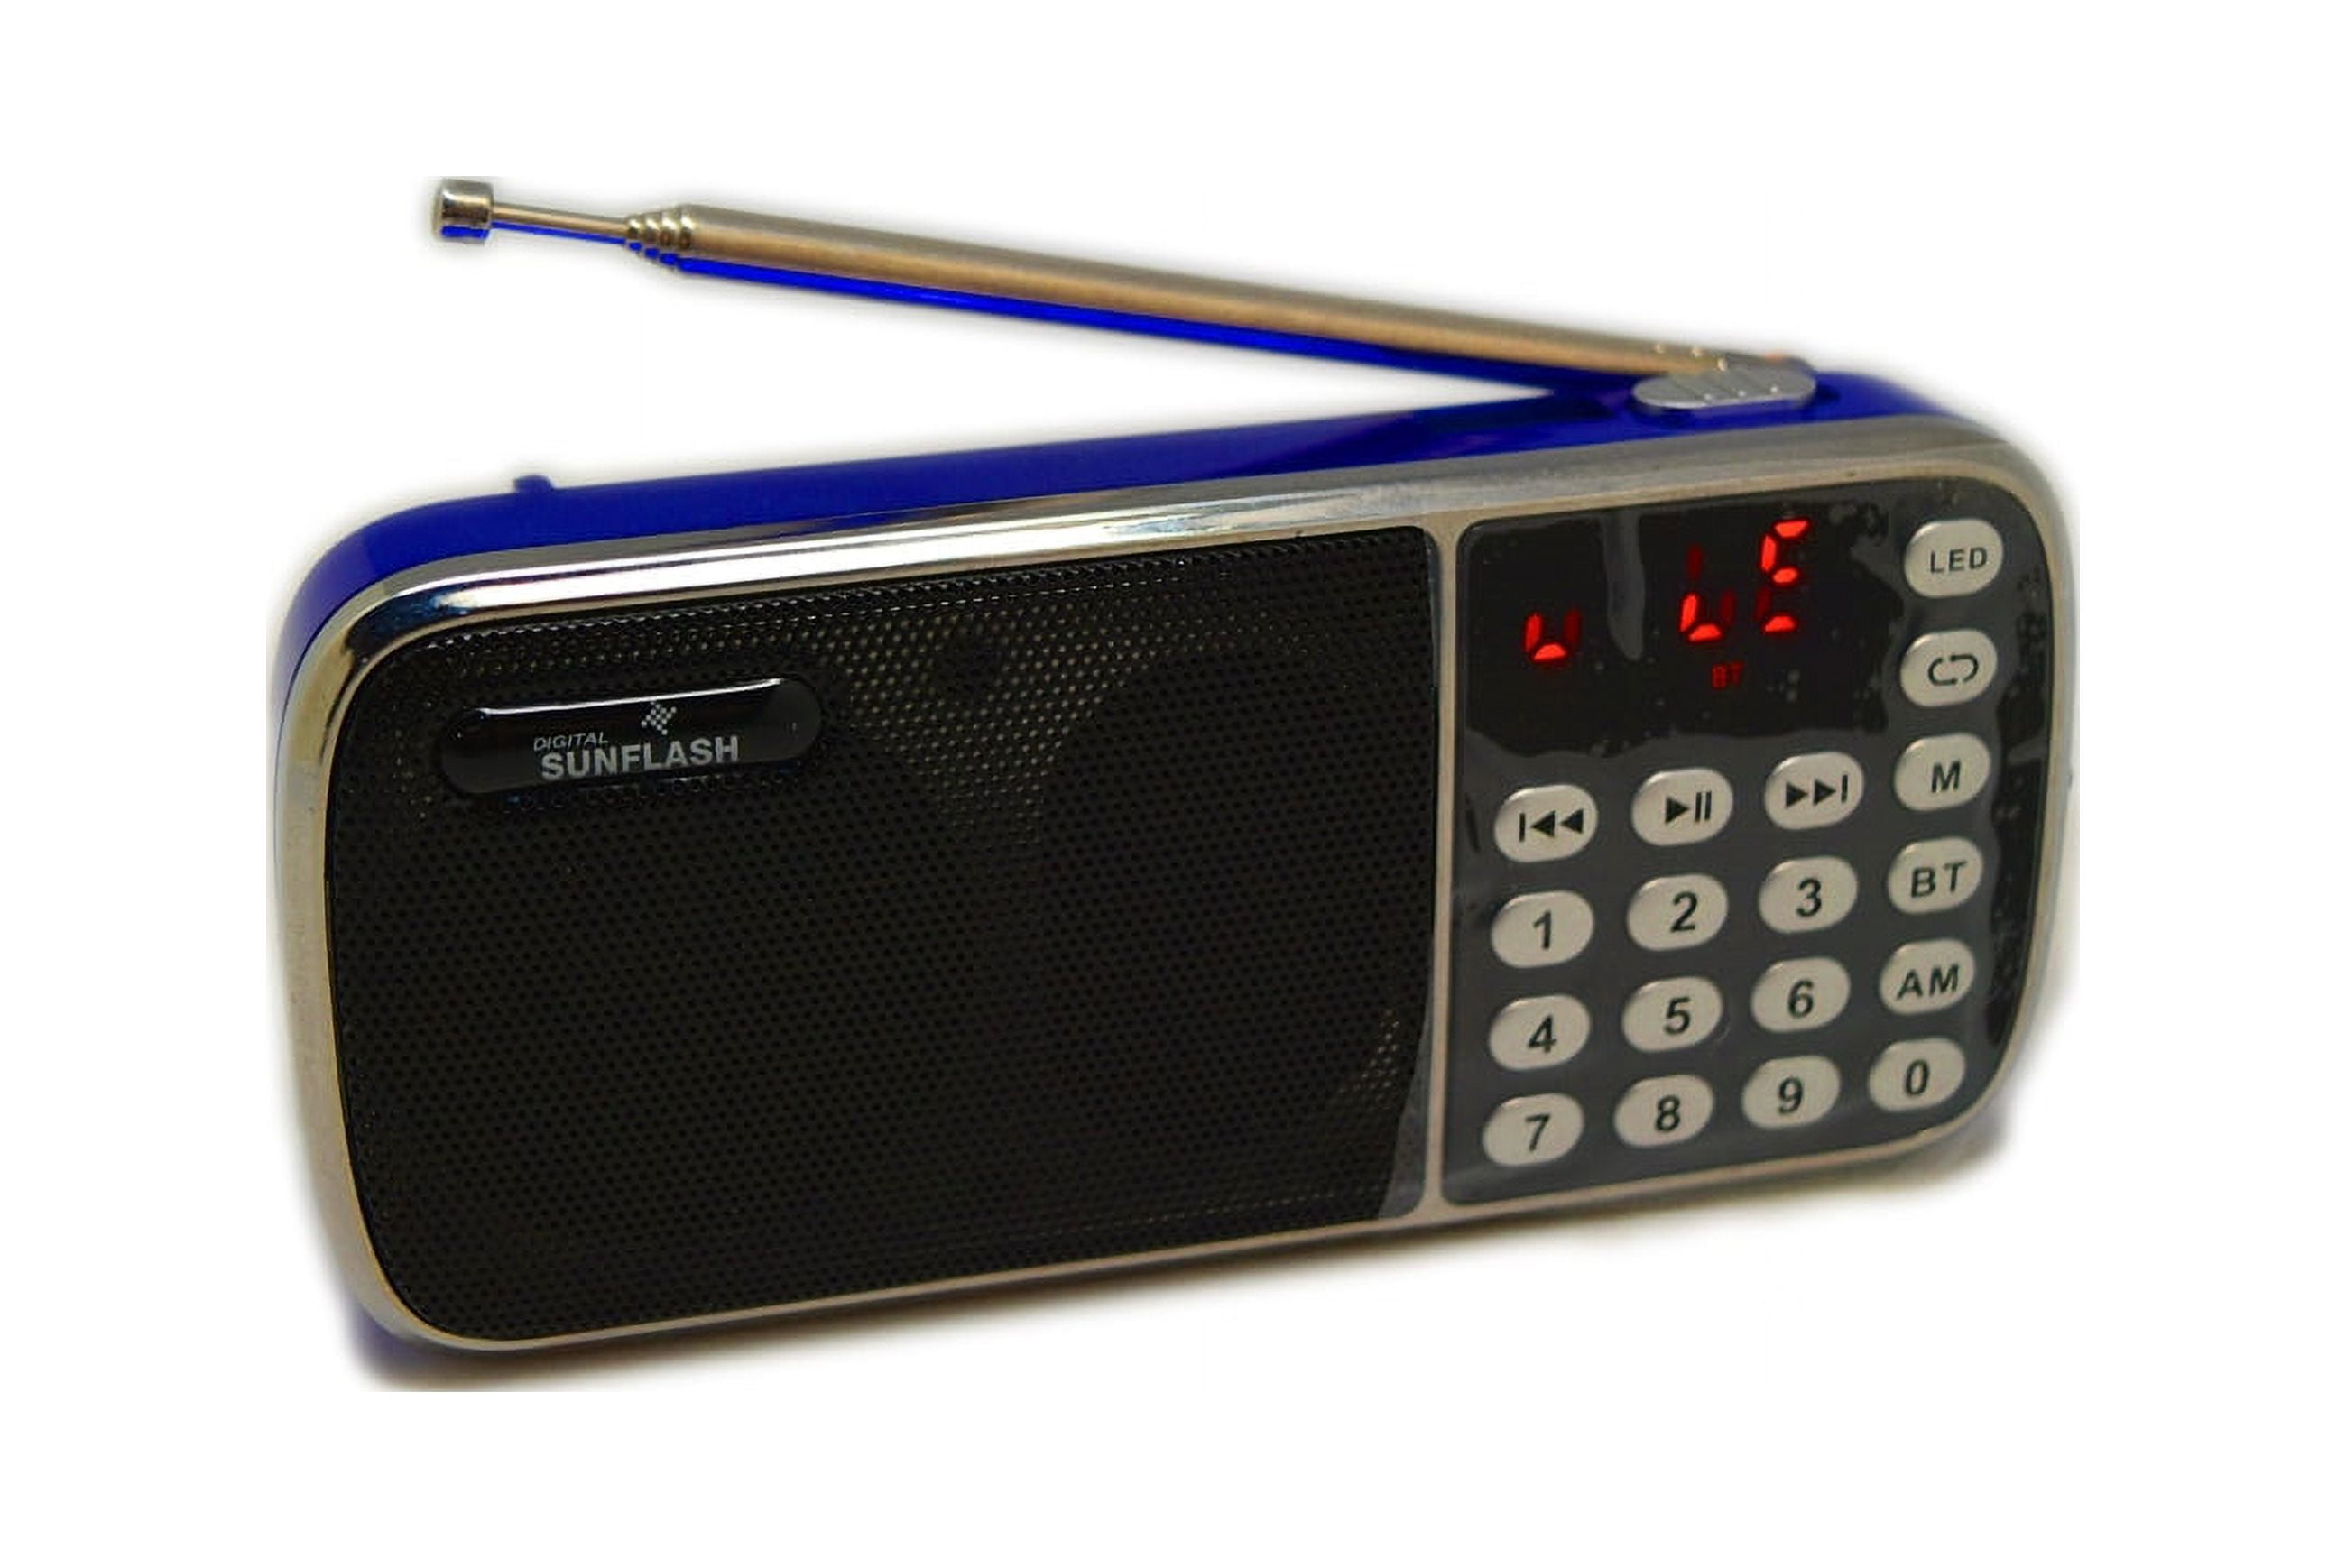  JEUJUG Radio AM FM portátil, radio Bluetooth 5.0